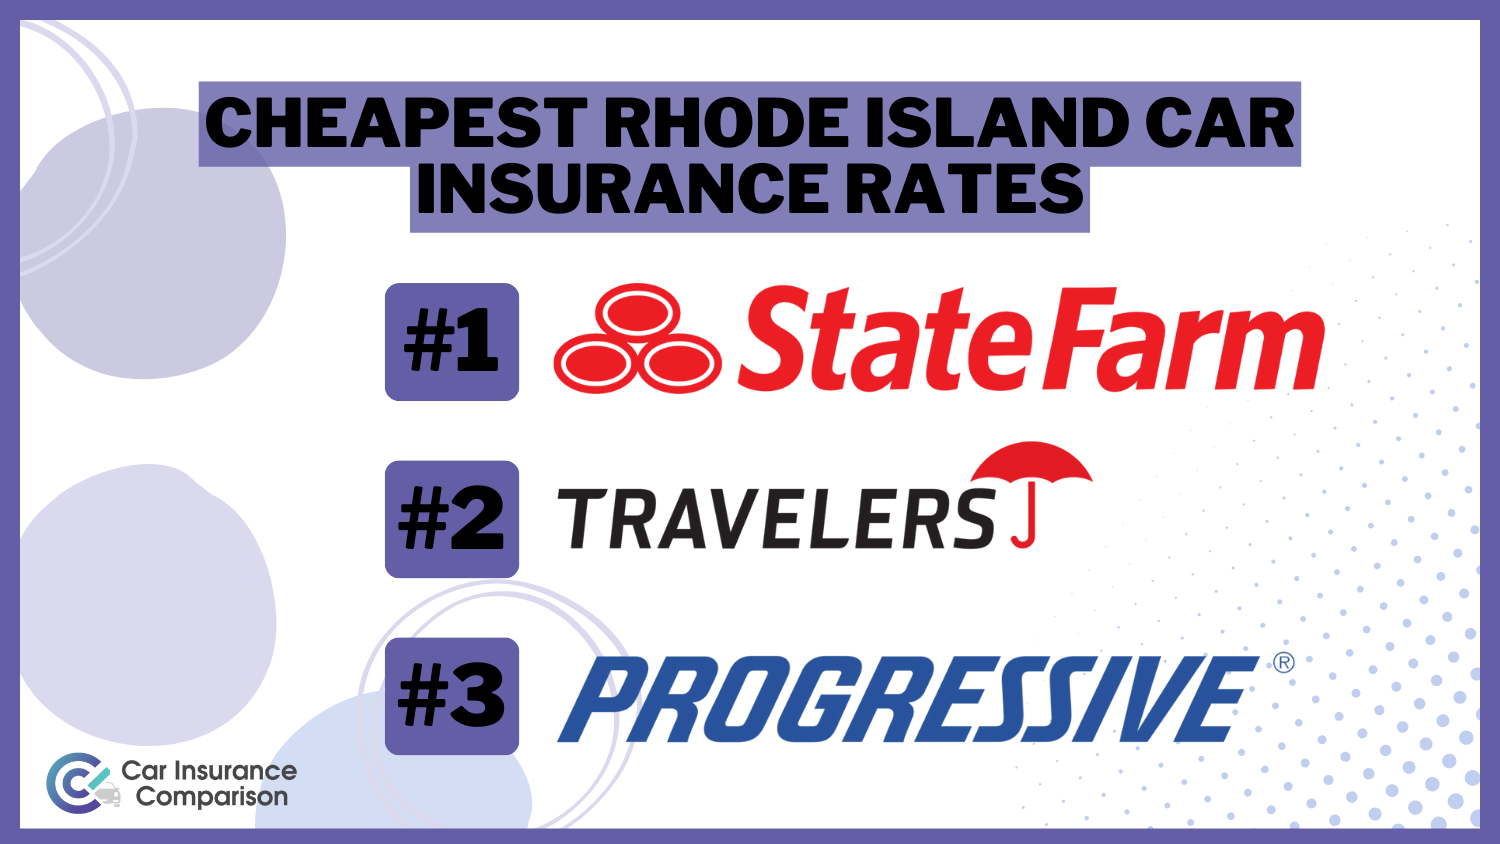 State Farm, Travelers, Progressive: Cheapest Rhode Island Car Insurance Rates